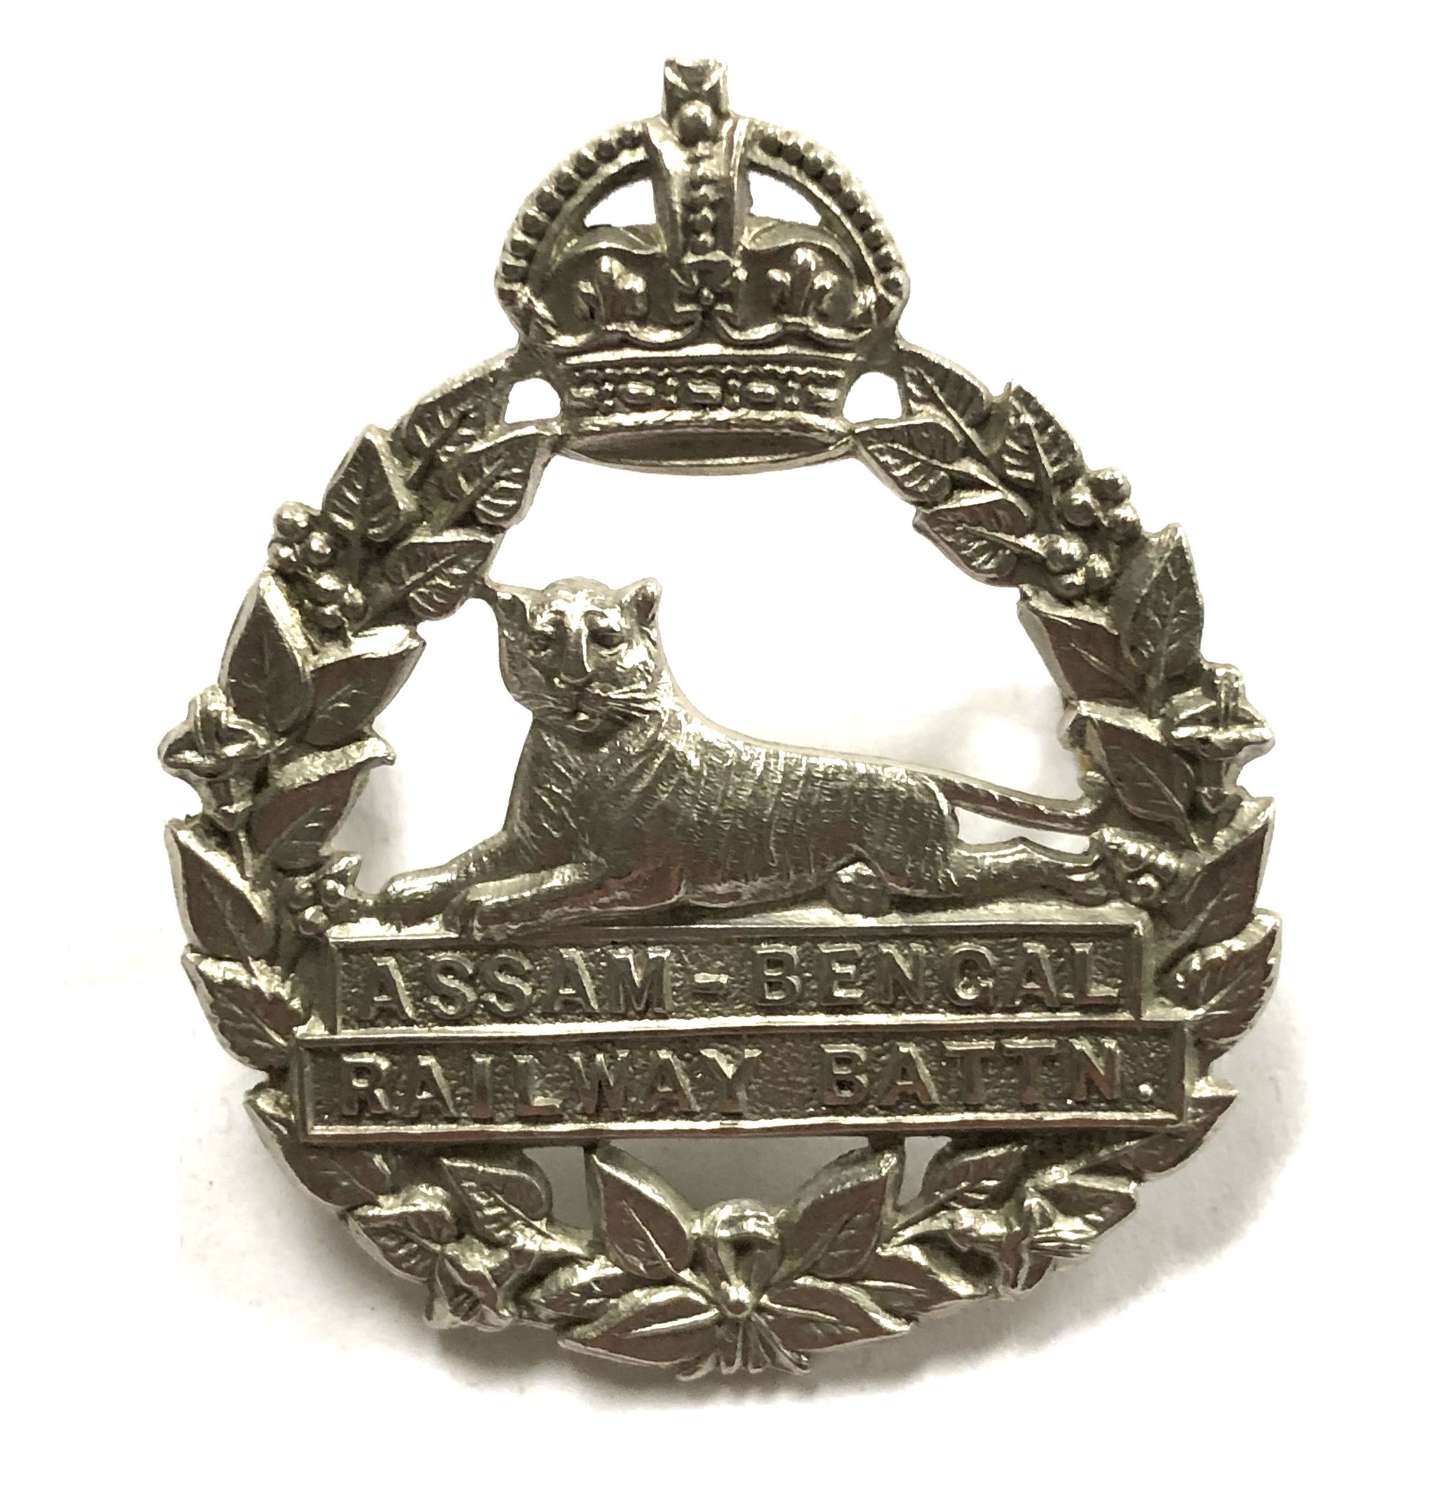 Indian Army. Assam-Bengal Railway Battalion AFI cap badge